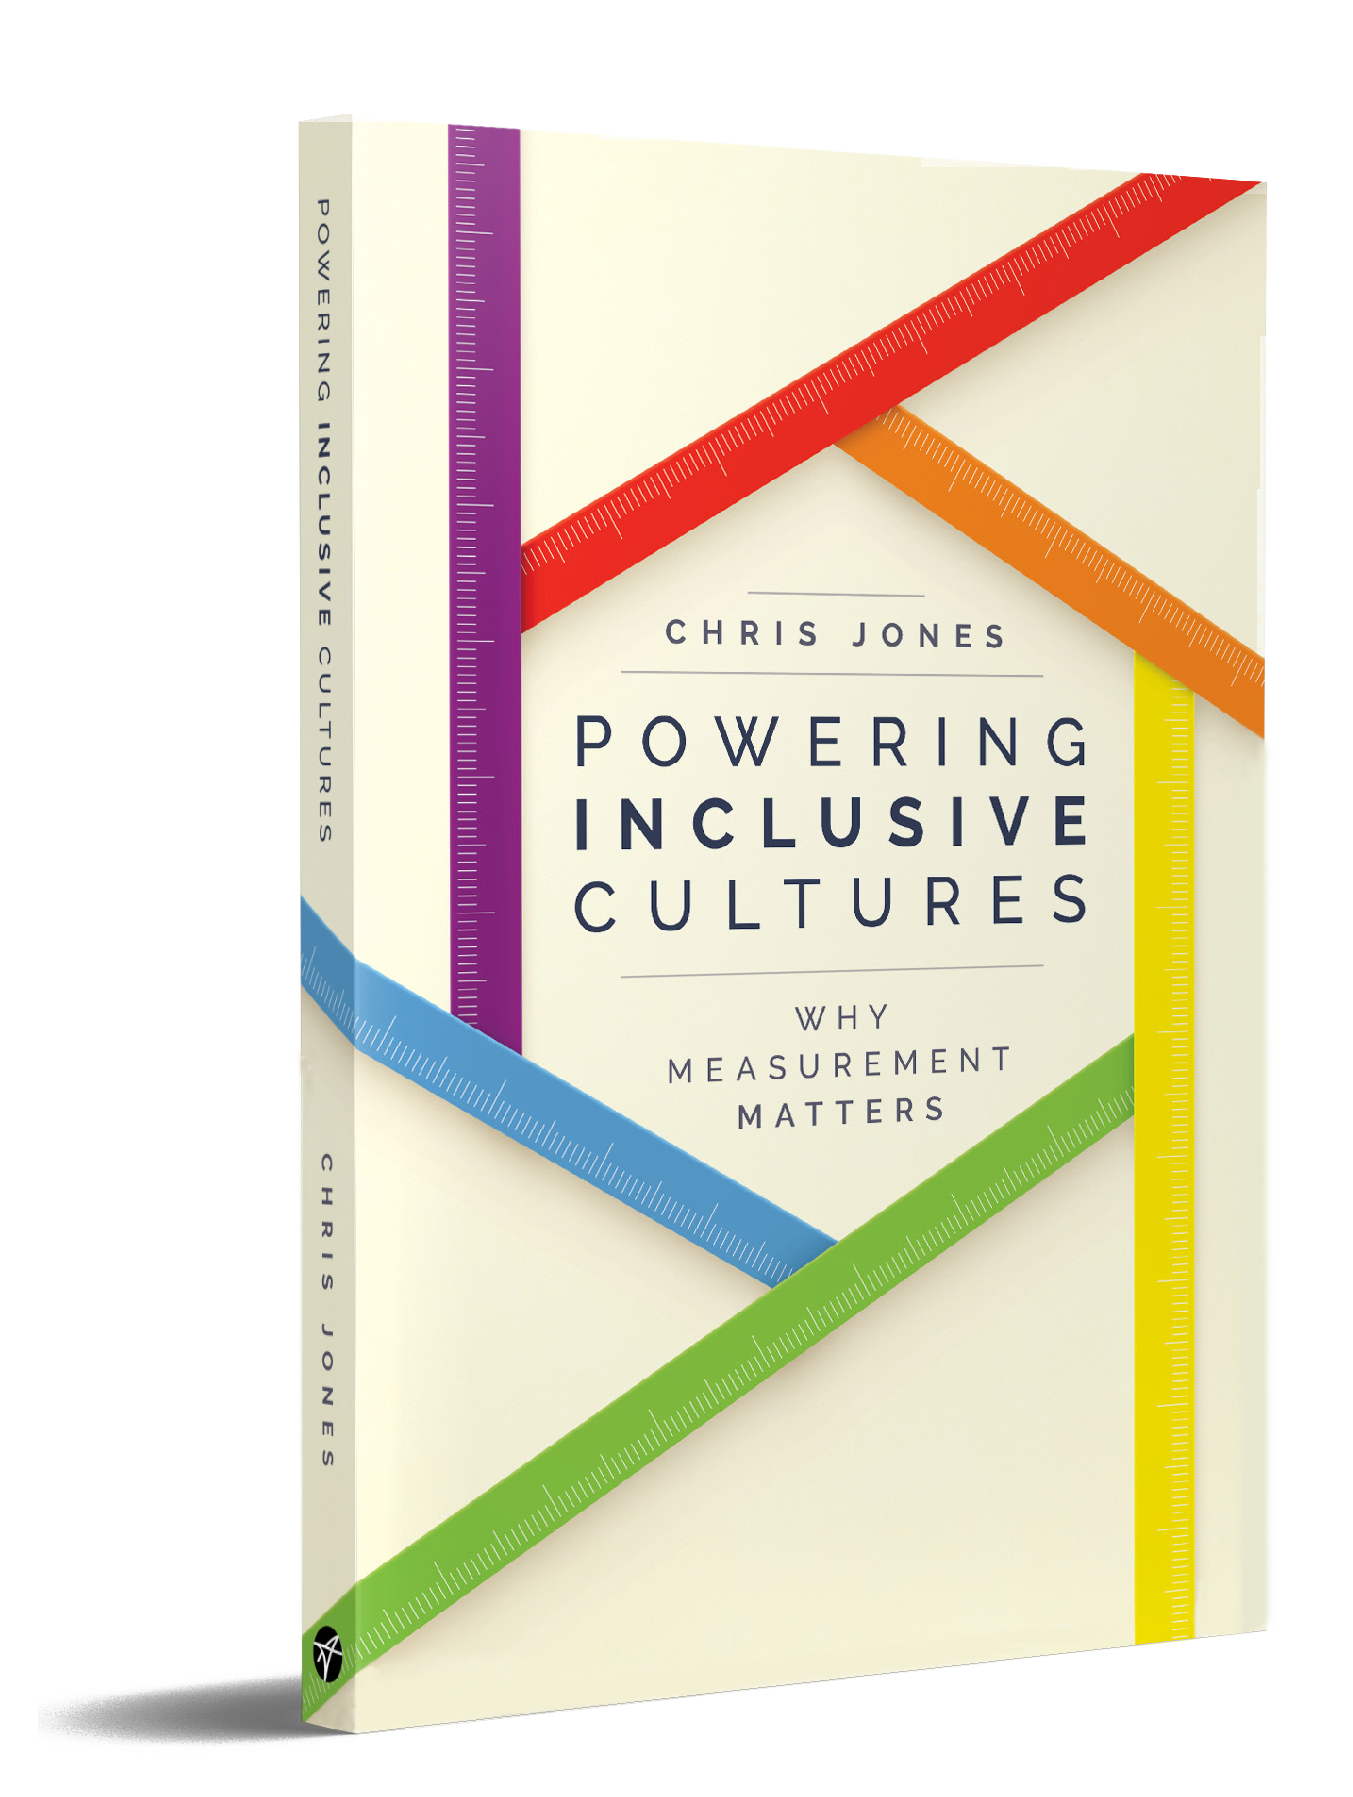 Powering Inclusive Cultures Why Measurement Matters by Chris Jones